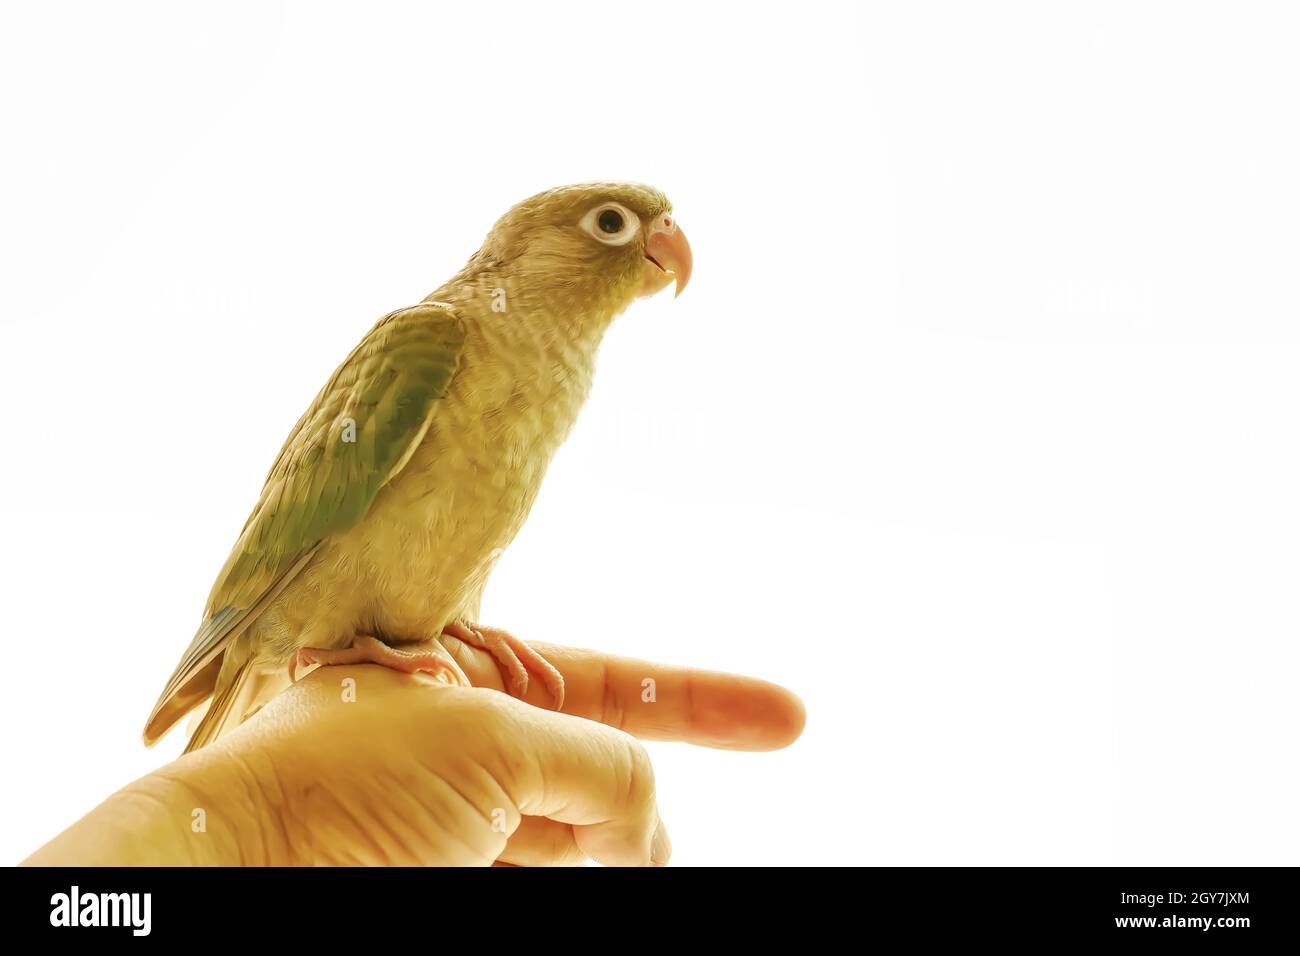 Green-cheeked parakeet o verde-cheeked conure sulle mani degli uomini. Foto Stock